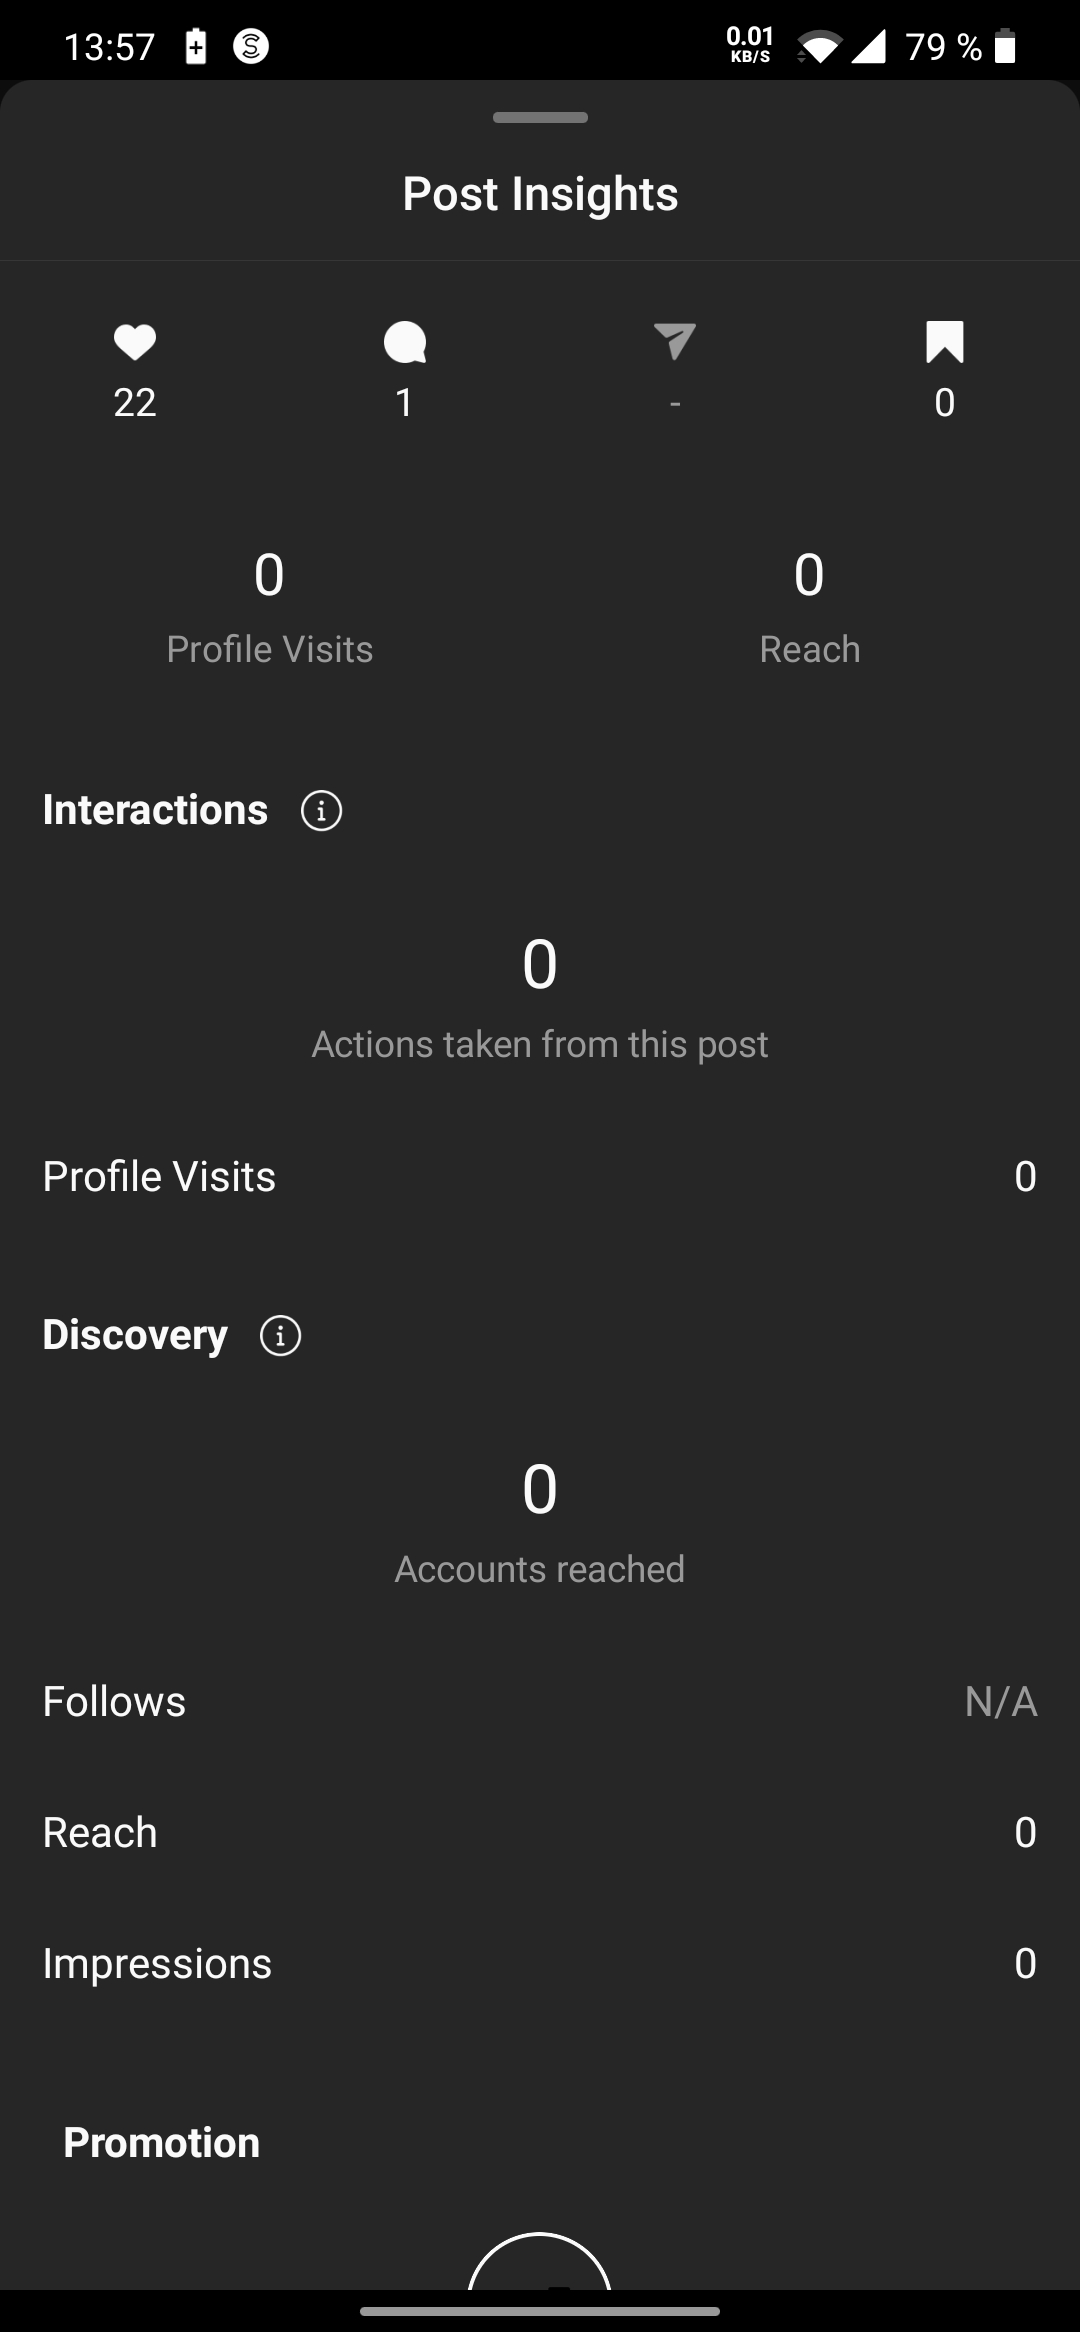 How To View And Analyze Instagram Statistics